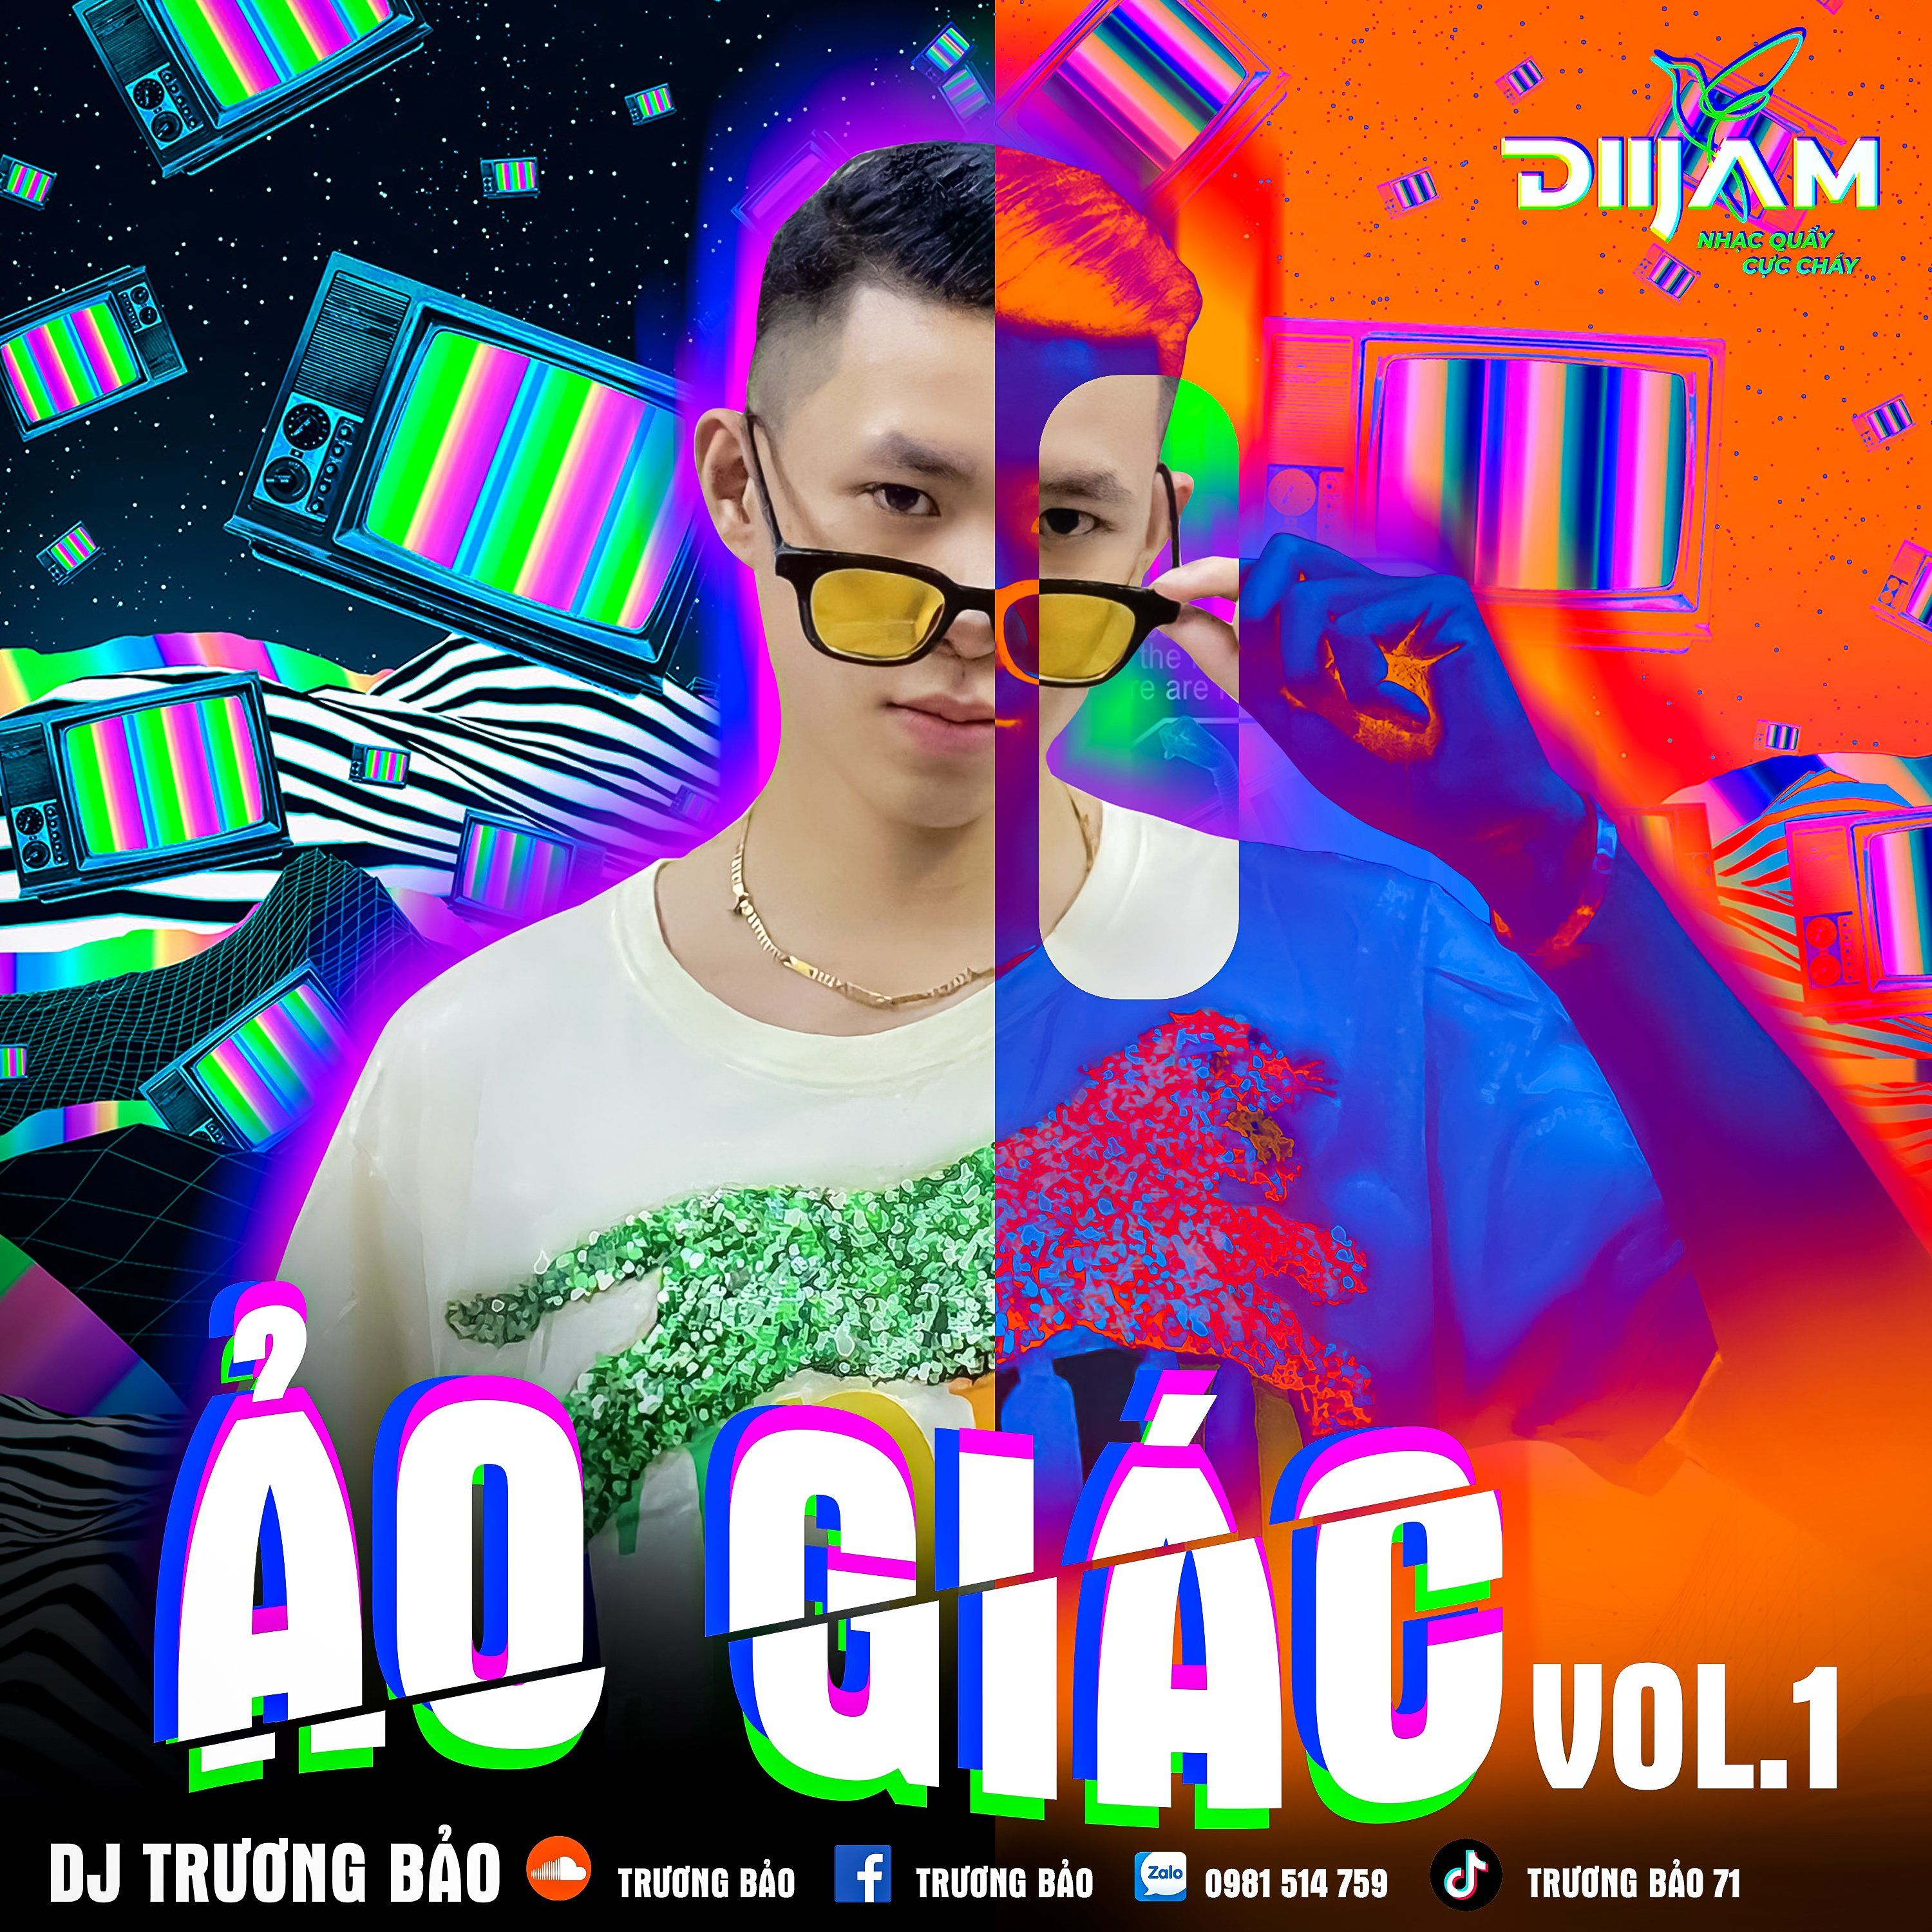 Преузимање Ảo Giác Vol 1 - DJ Trương Bảo (Nonstop Diijam)